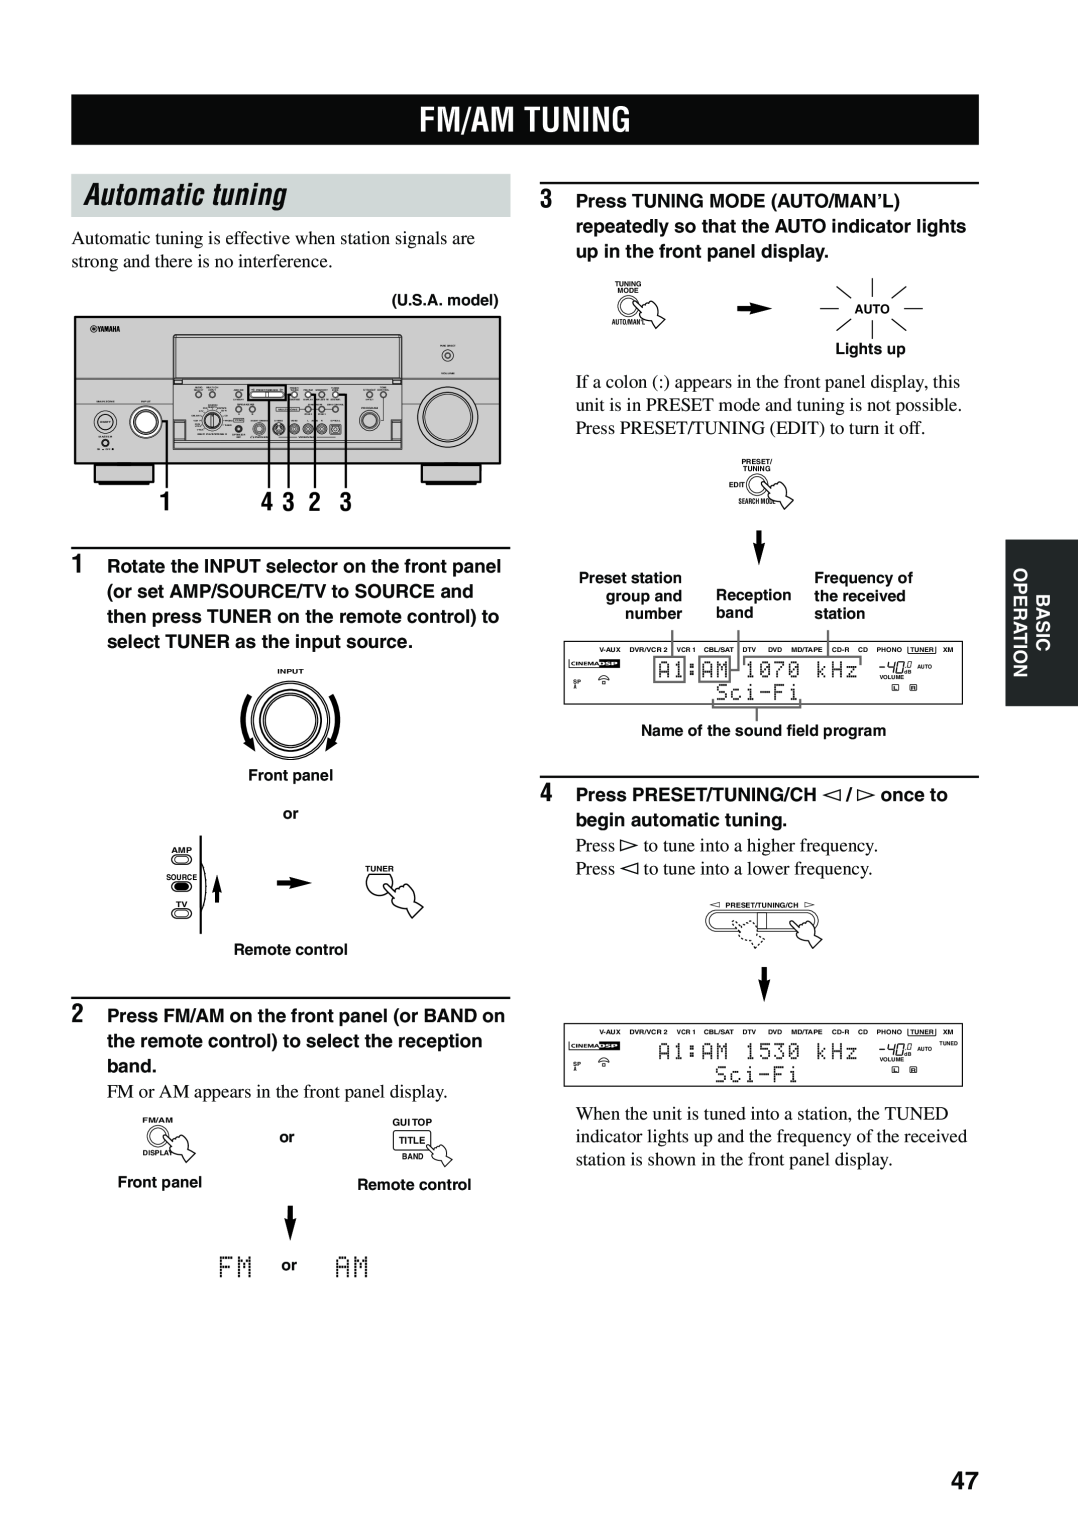 Yamaha X-V2600 owner manual Fm/Am Tuning, Automatic tuning, 1070, Sci-Fi, A1:AM 1530 kHz 